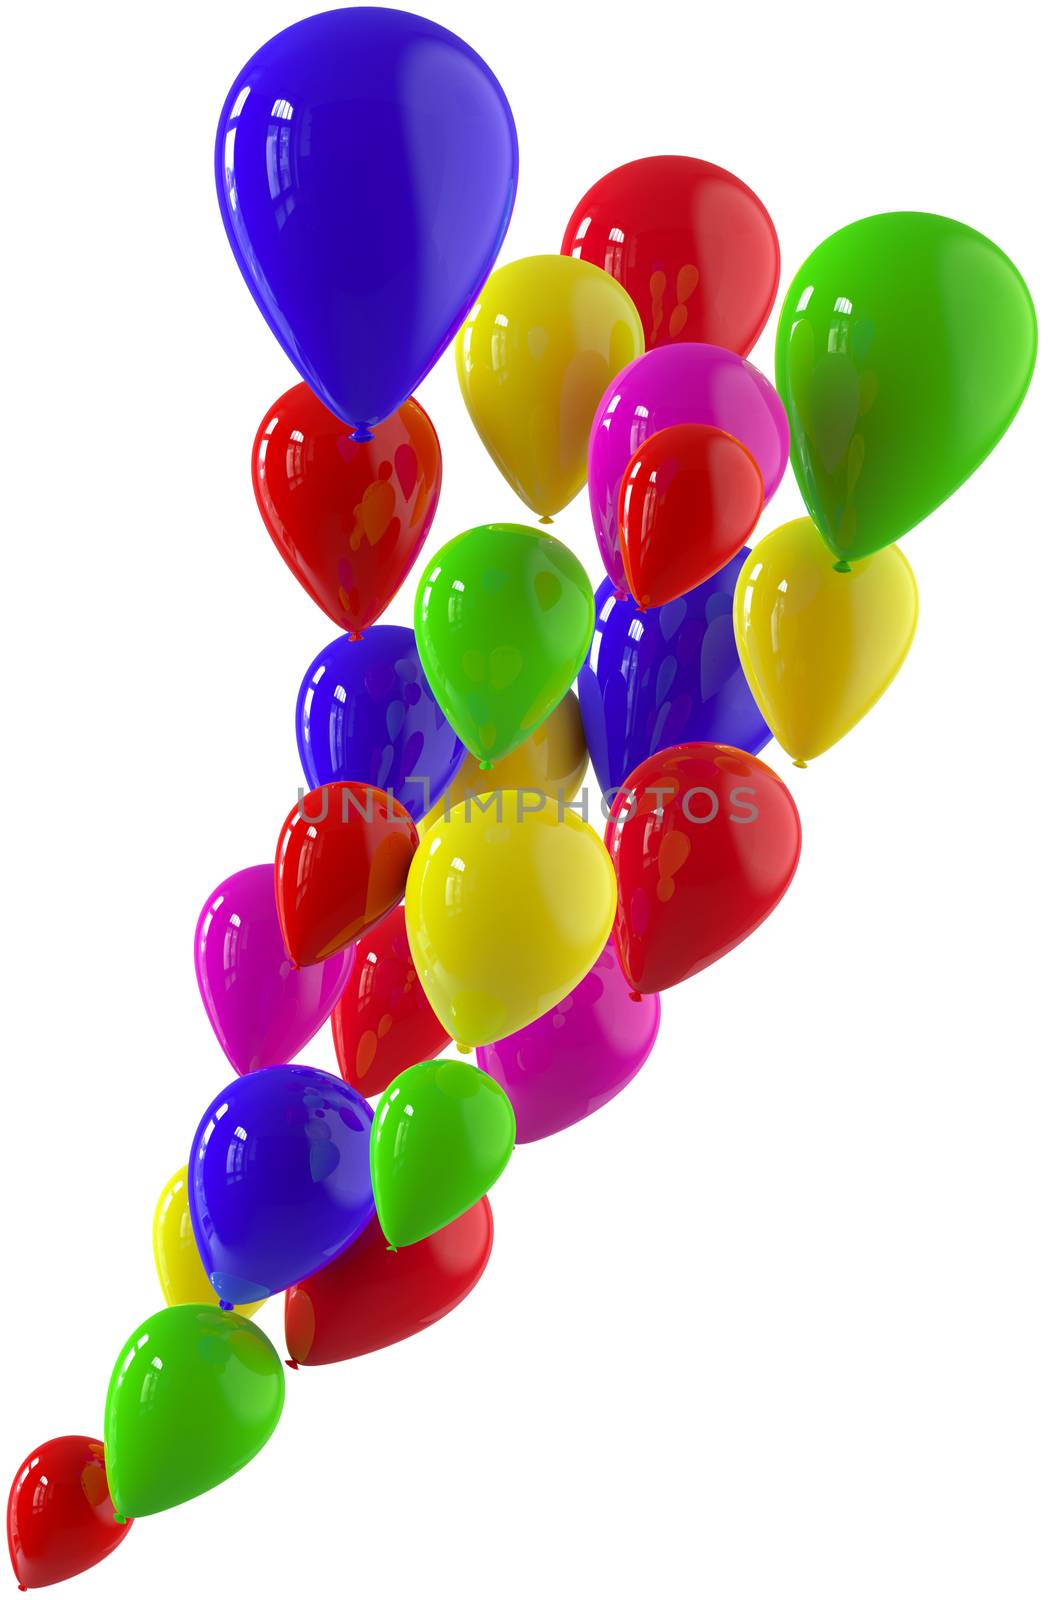 Flying balloons by merzavka